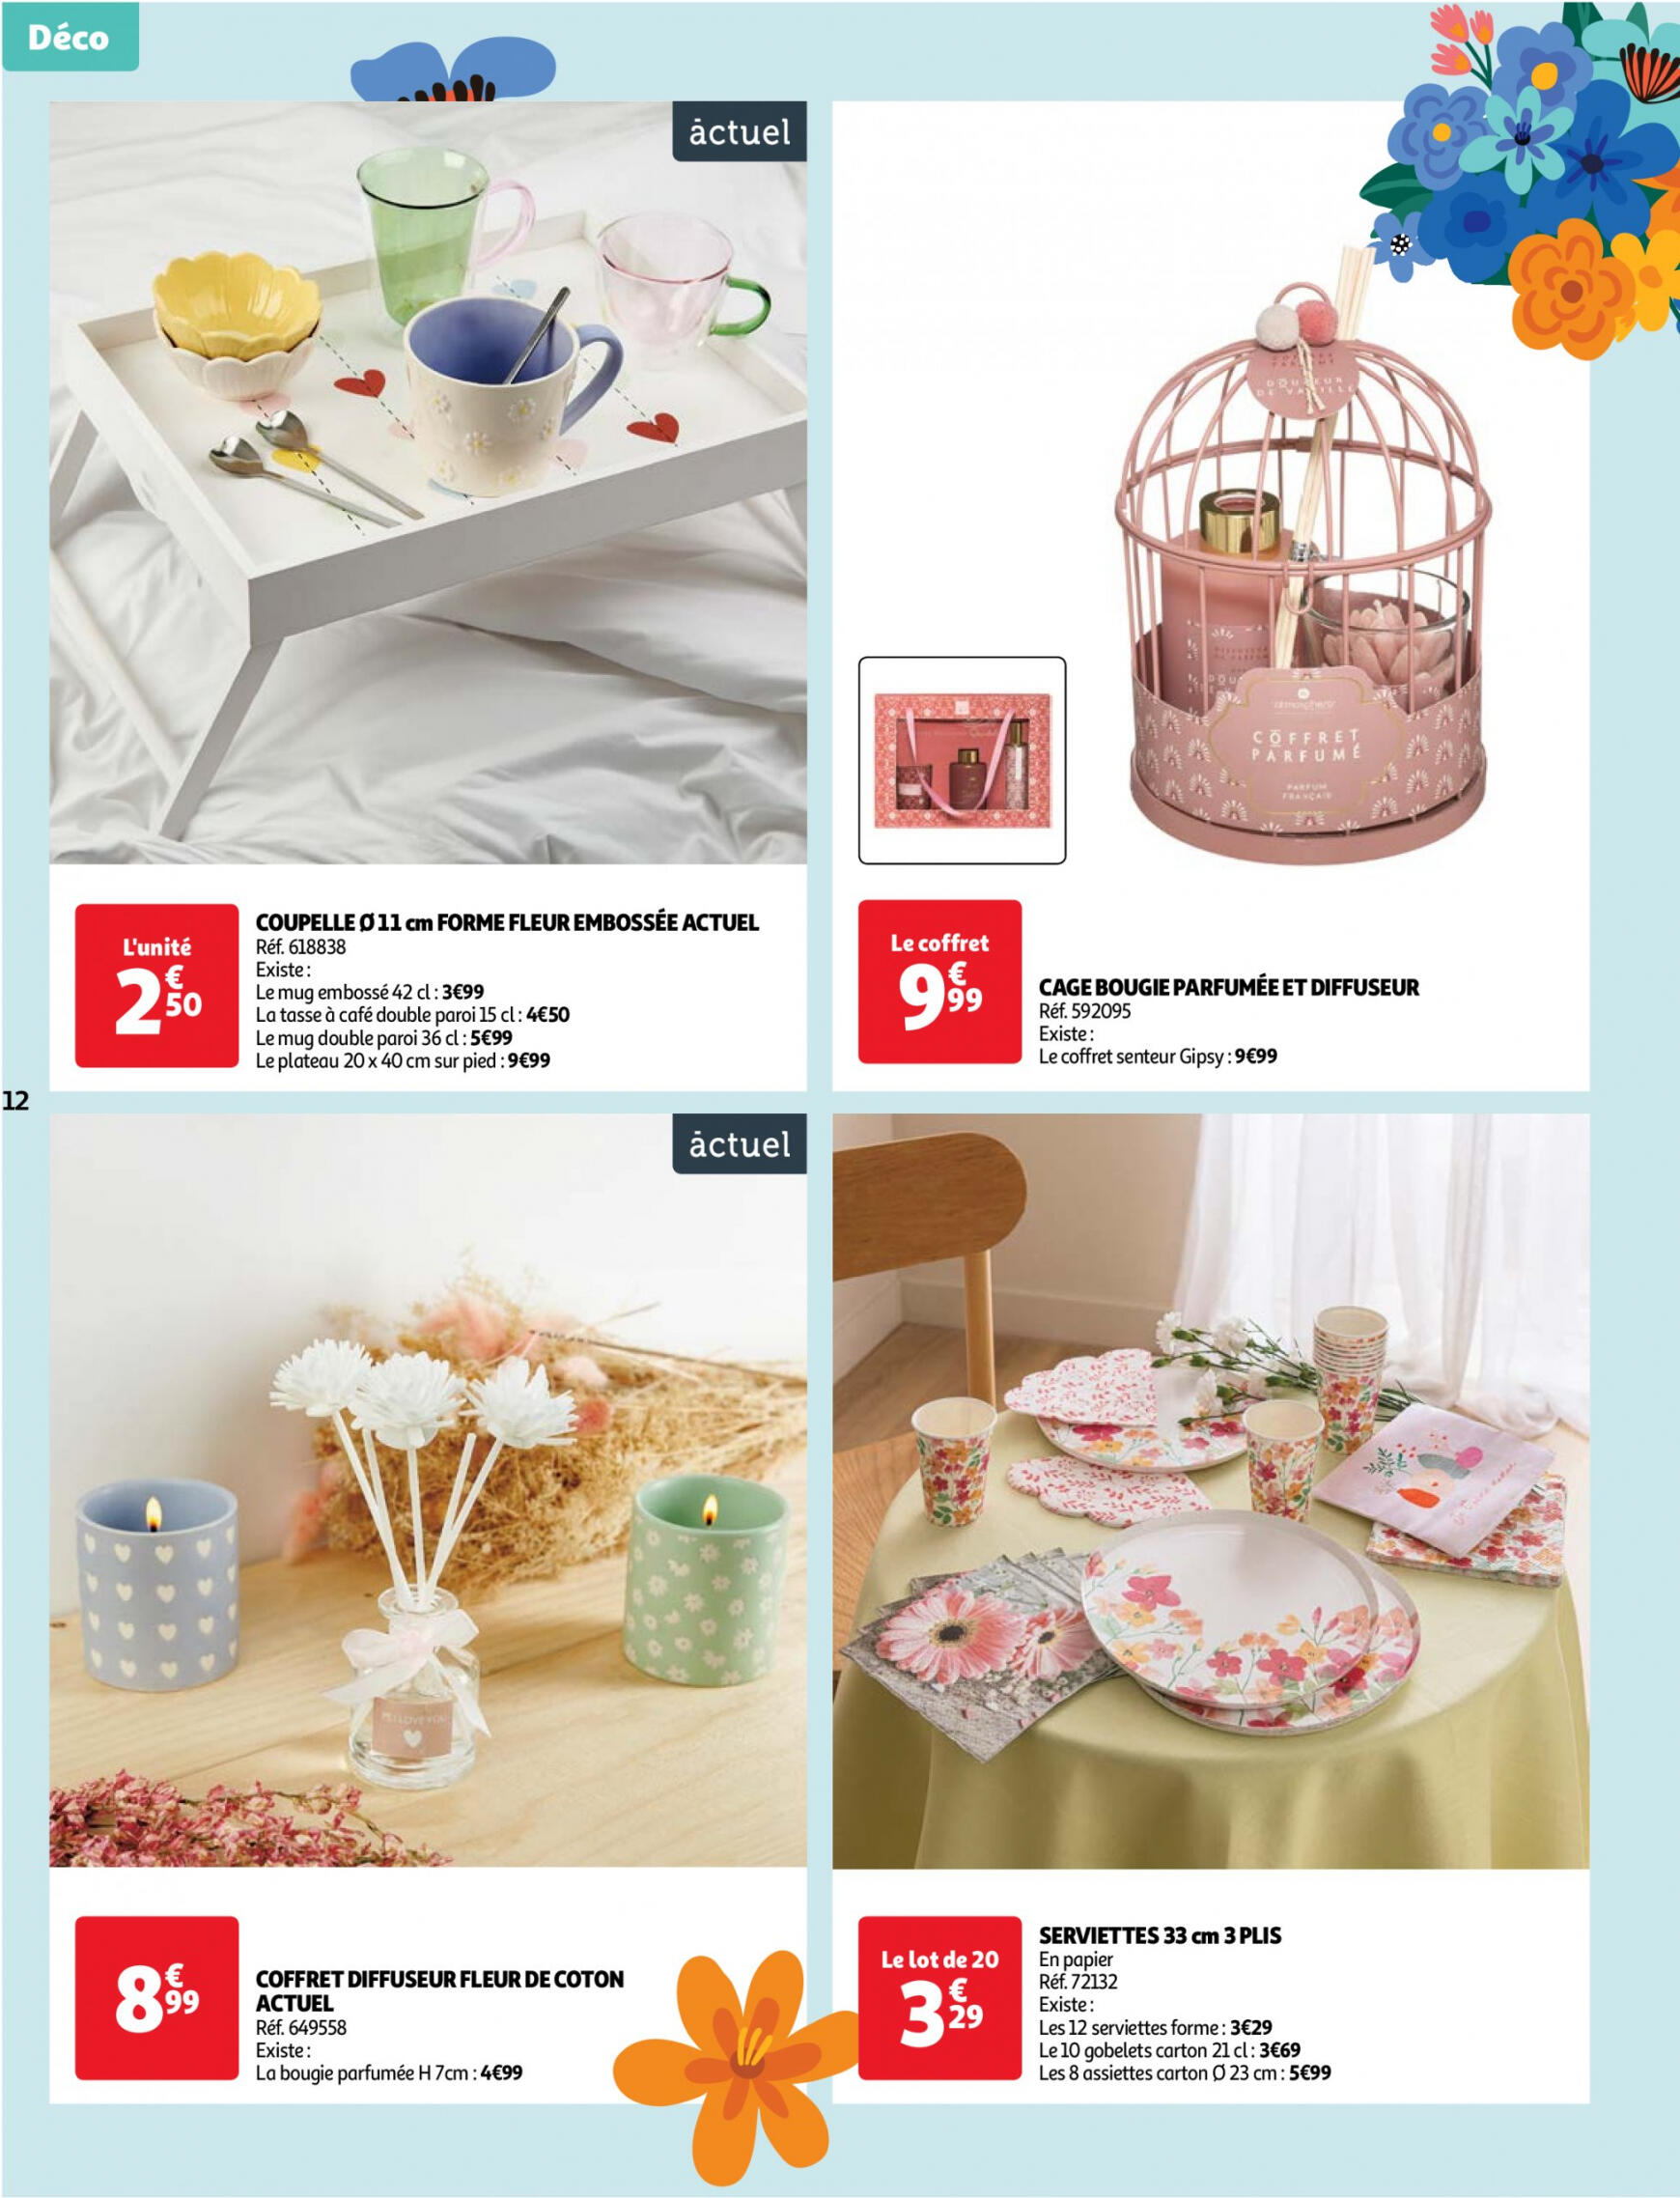 auchan - Auchan - Merci maman folder huidig 14.05. - 26.05. - page: 12